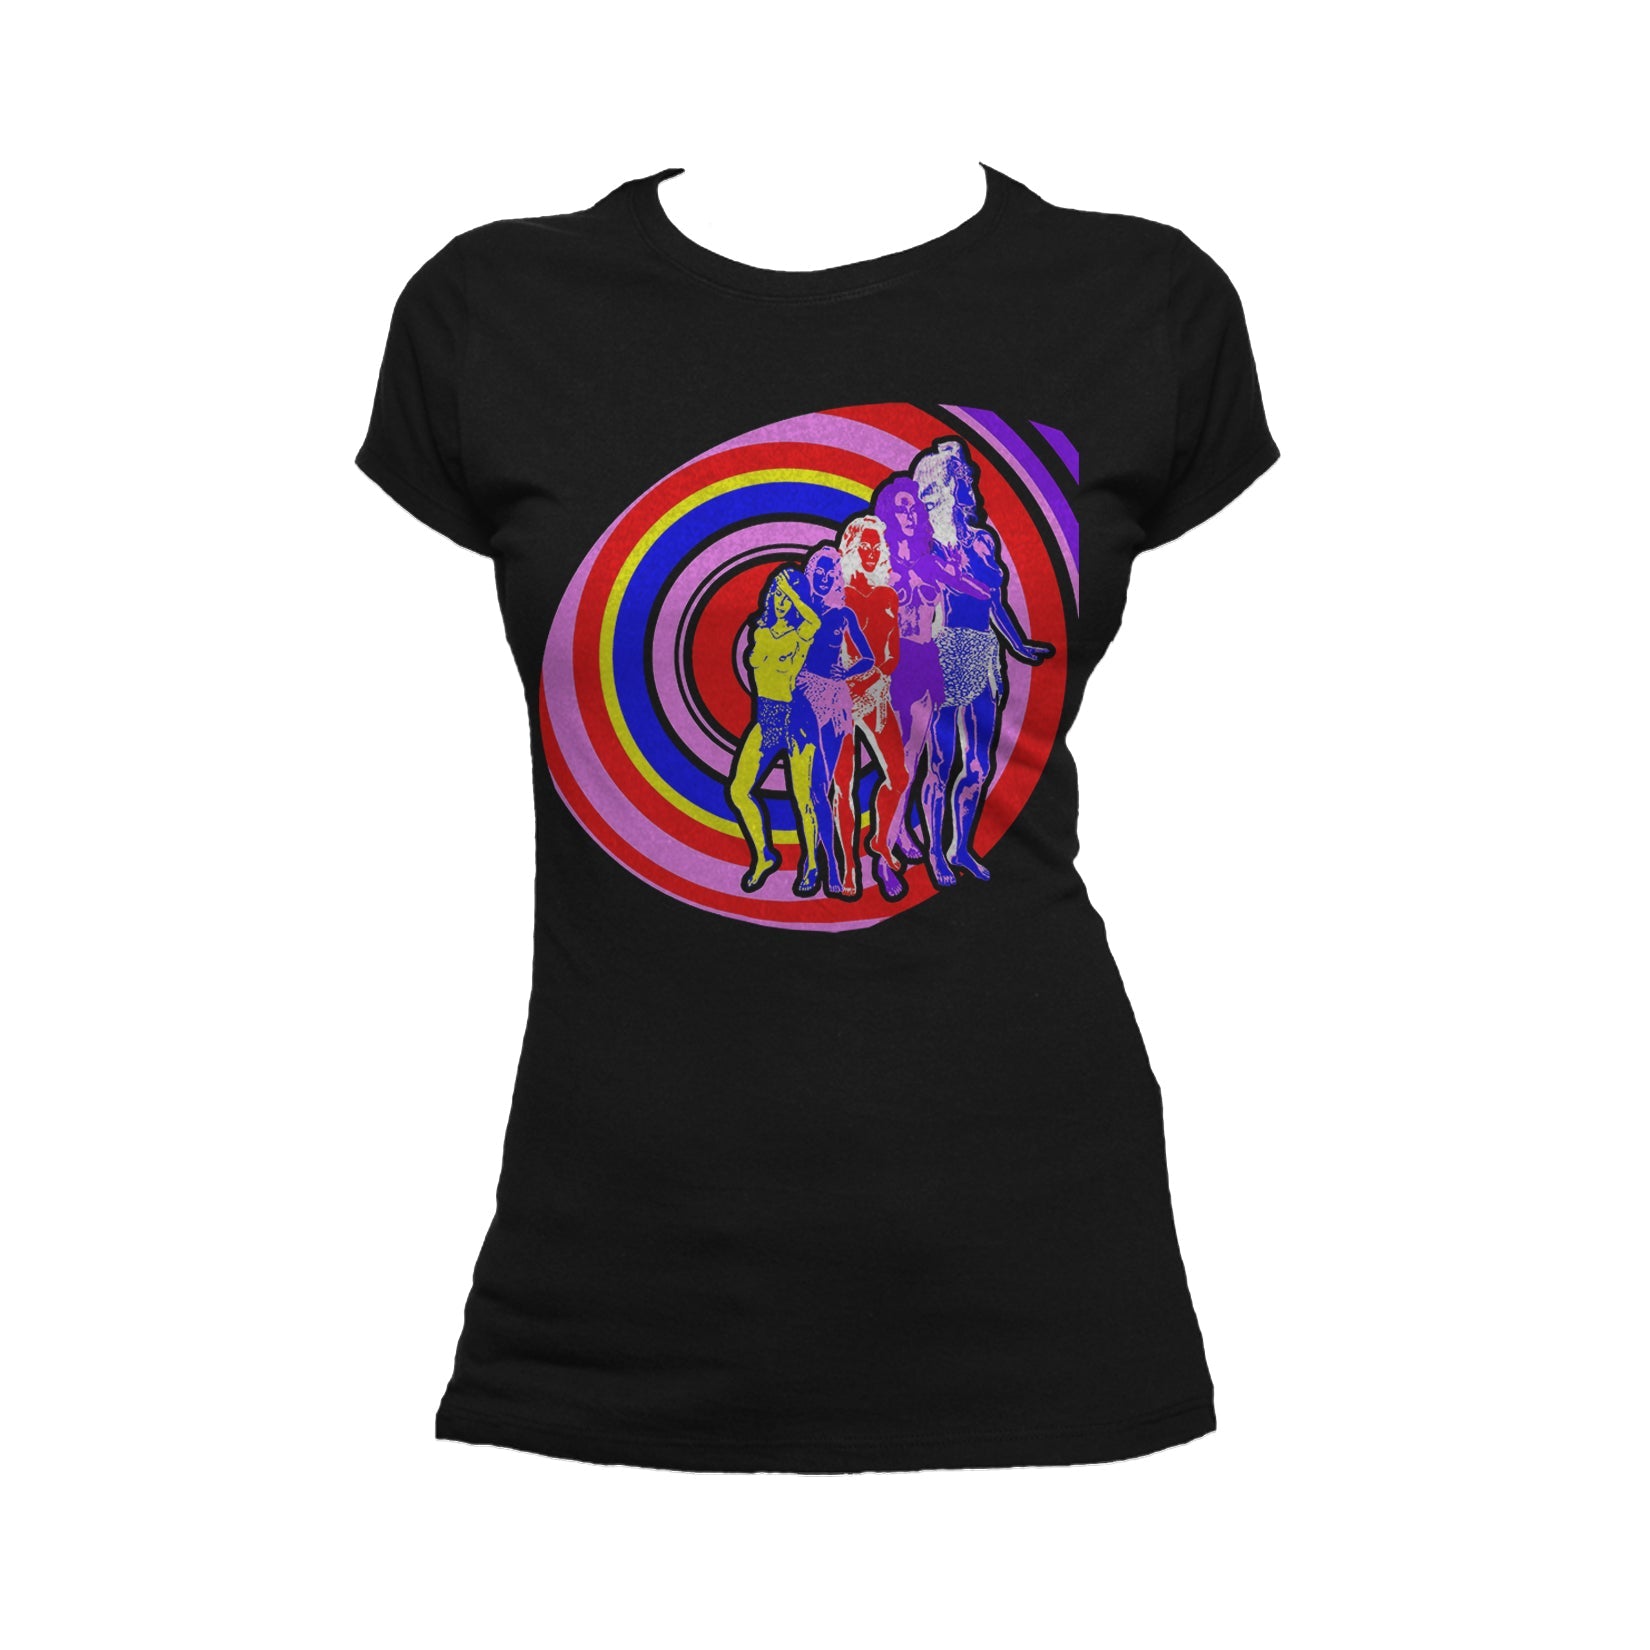 US Brand X Future Retro Spiral Babe Official Women's T-shirt ()